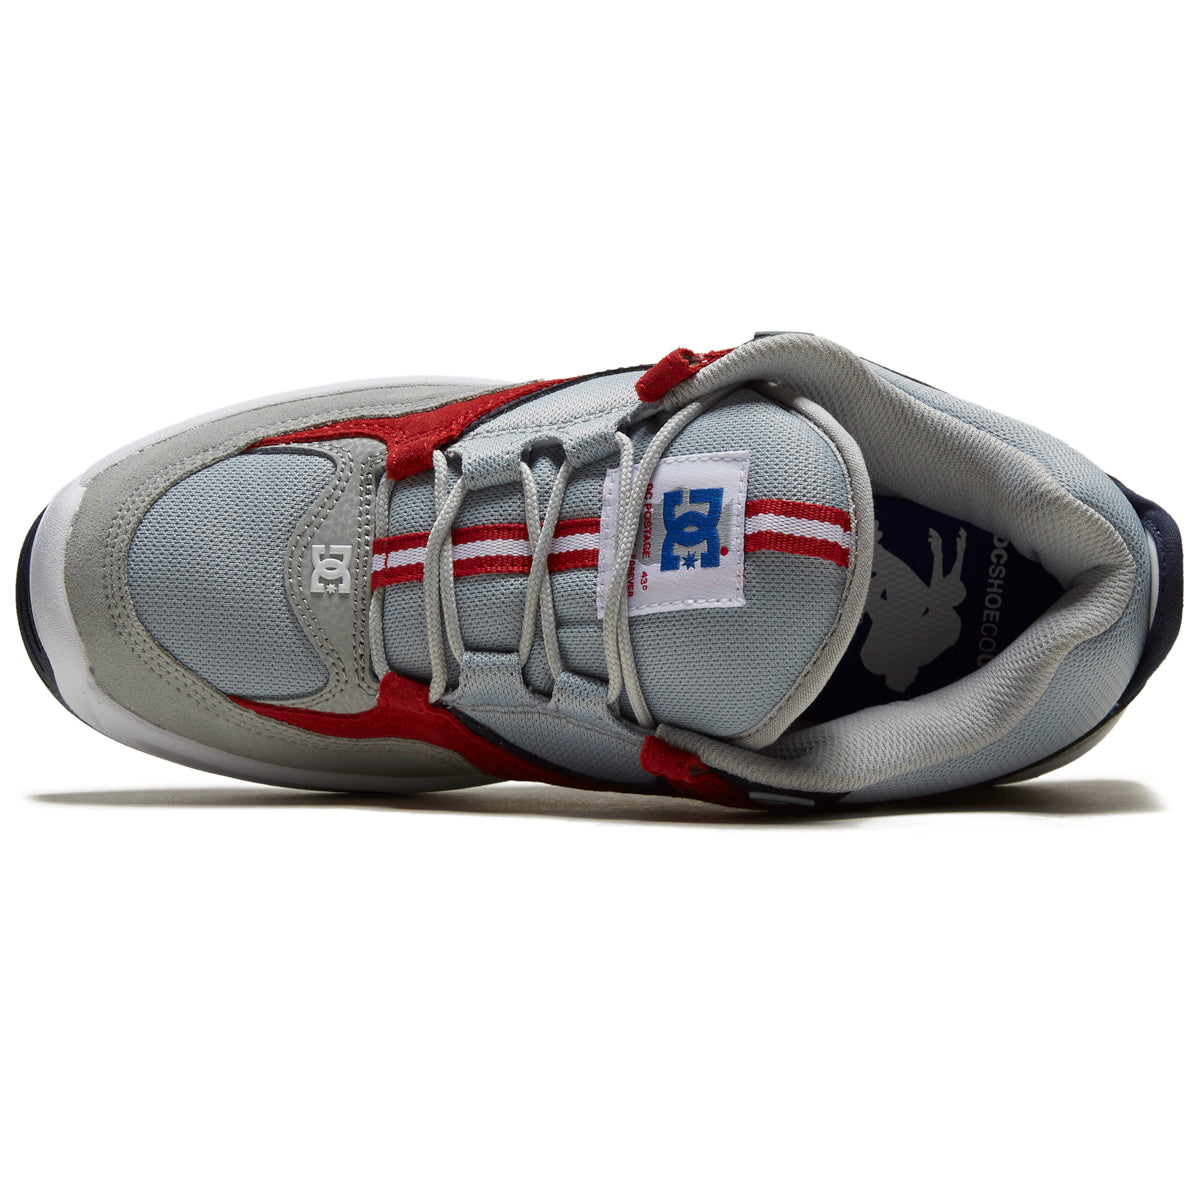 DC Kalynx Zero S Shoes - Grey/Red image 3